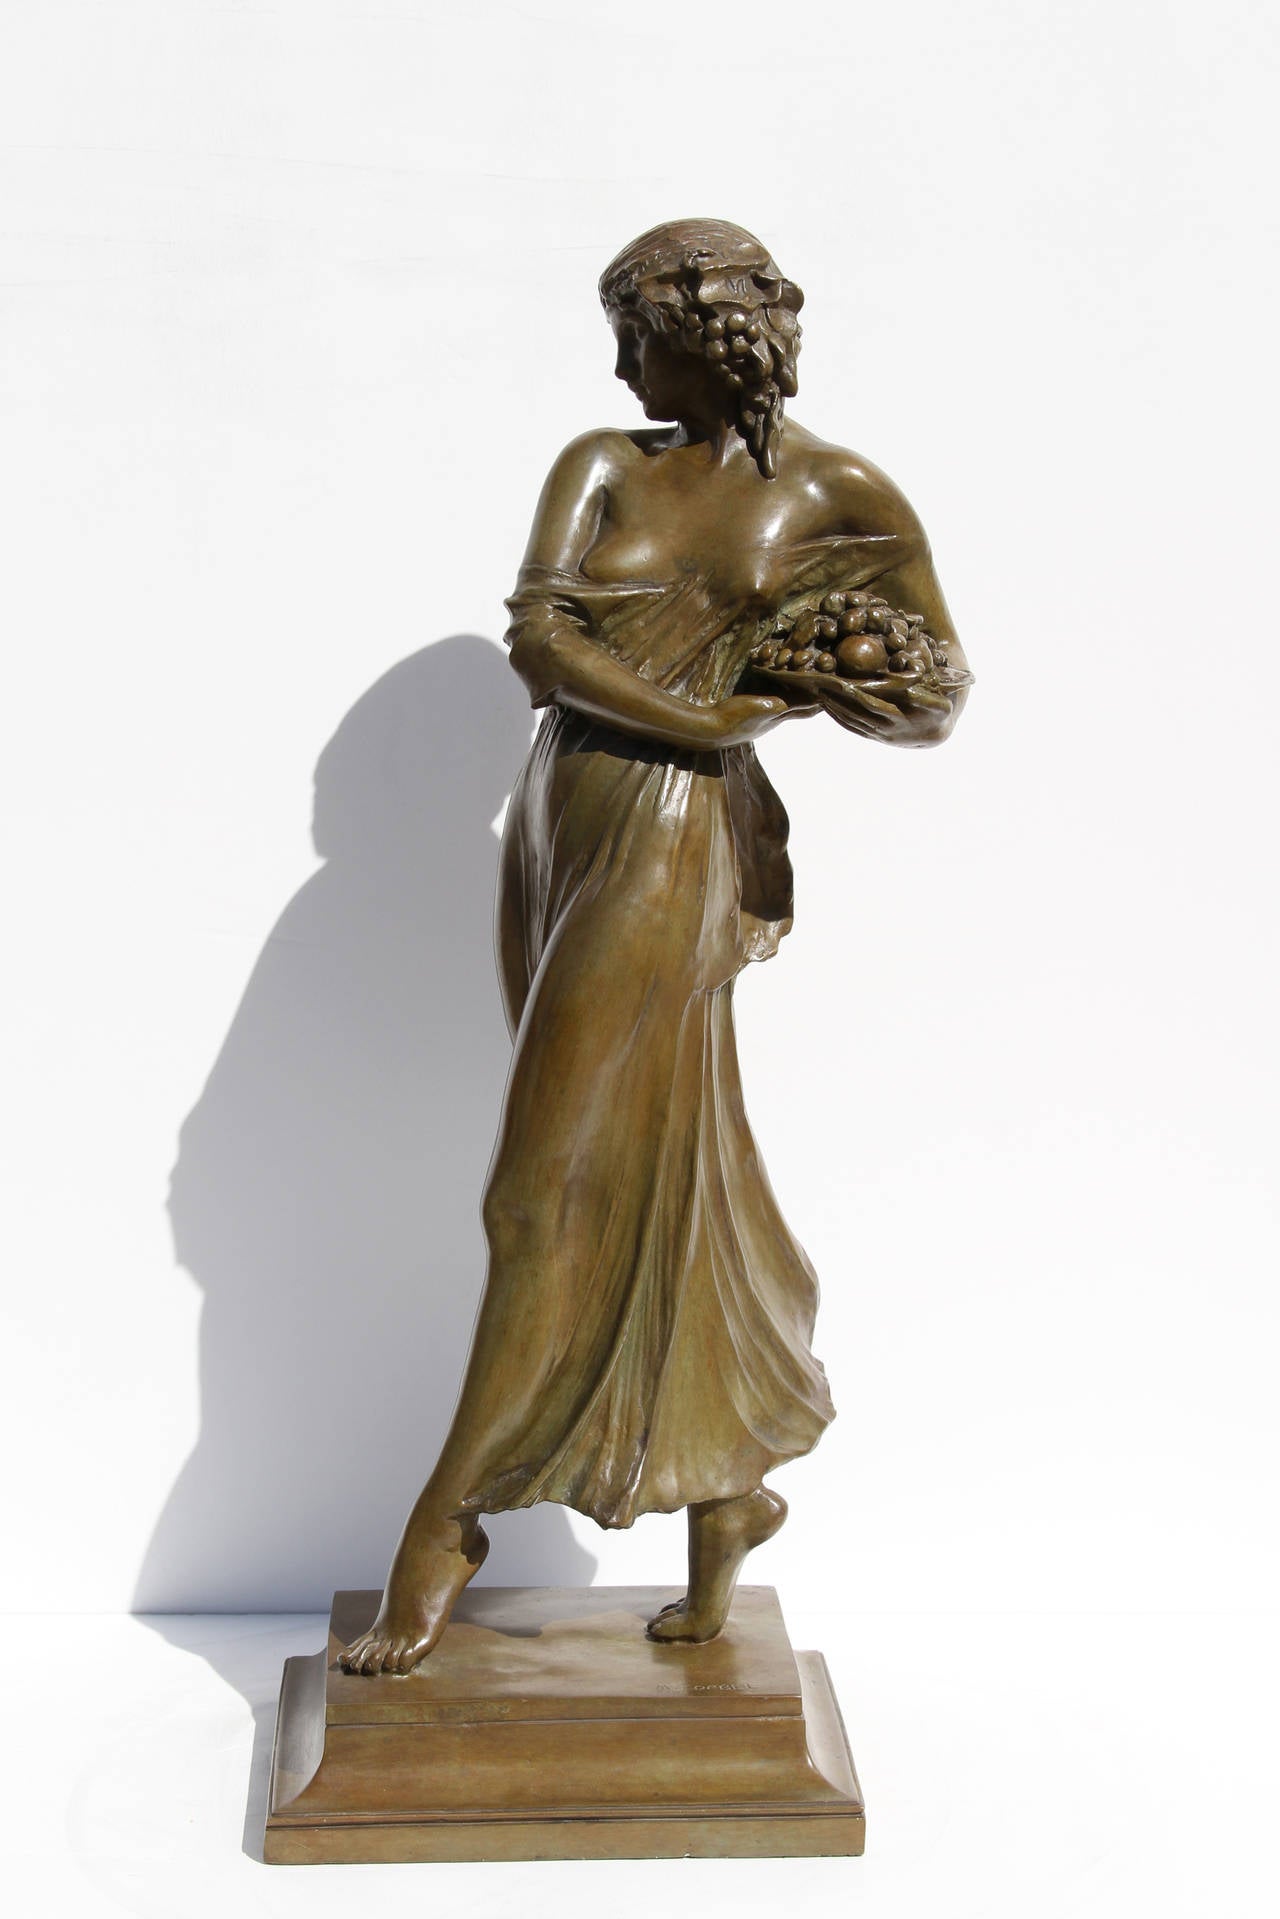 Mario Joseph Korbel Figurative Sculpture - Woman Carrying Grapes, Art Nouveau Bronze by Mario Korbel